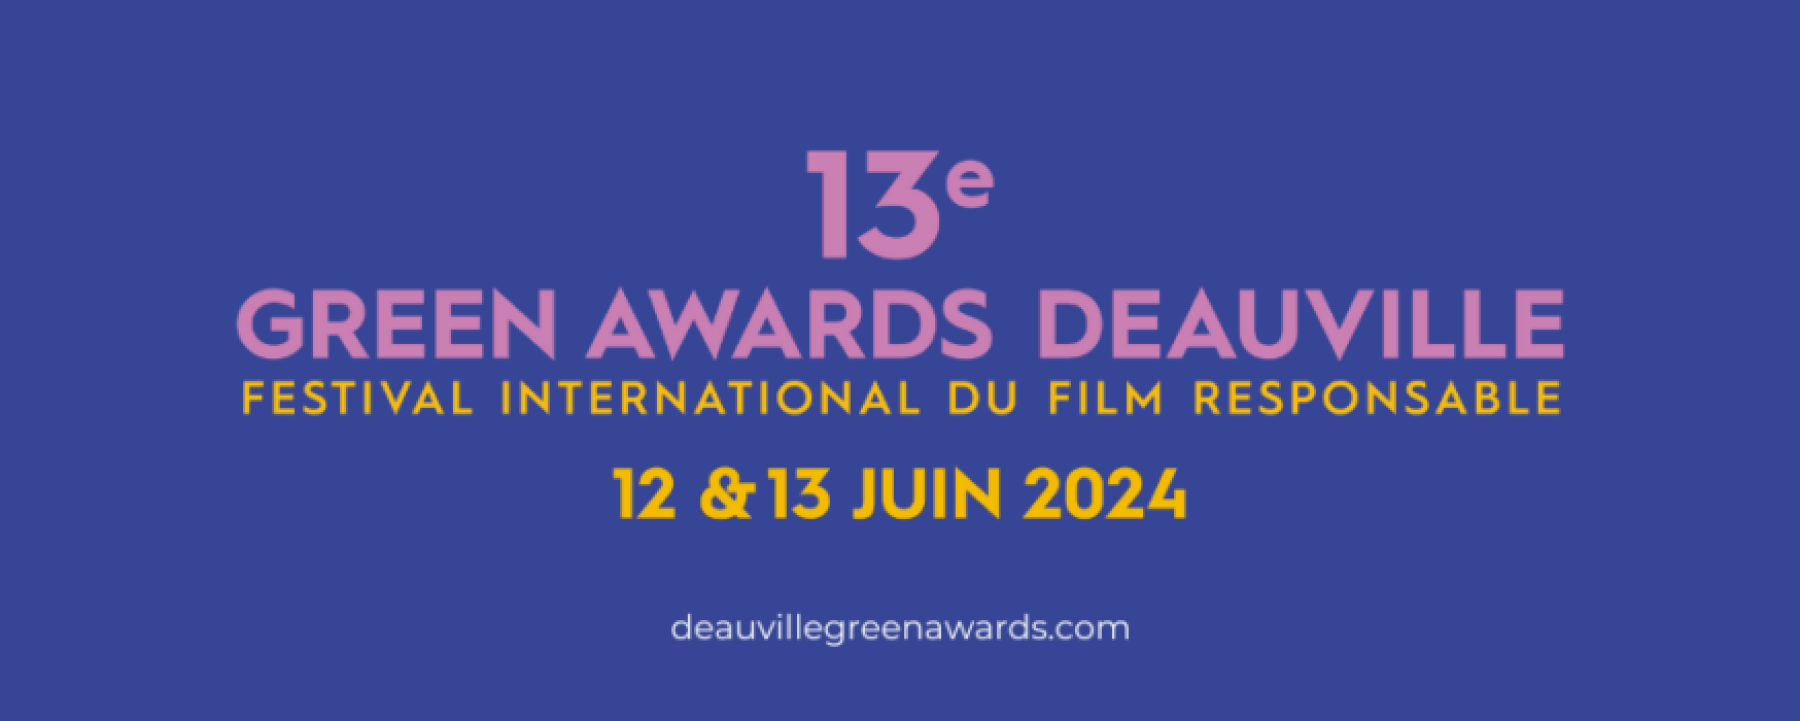 Deauville Green Awards 2024